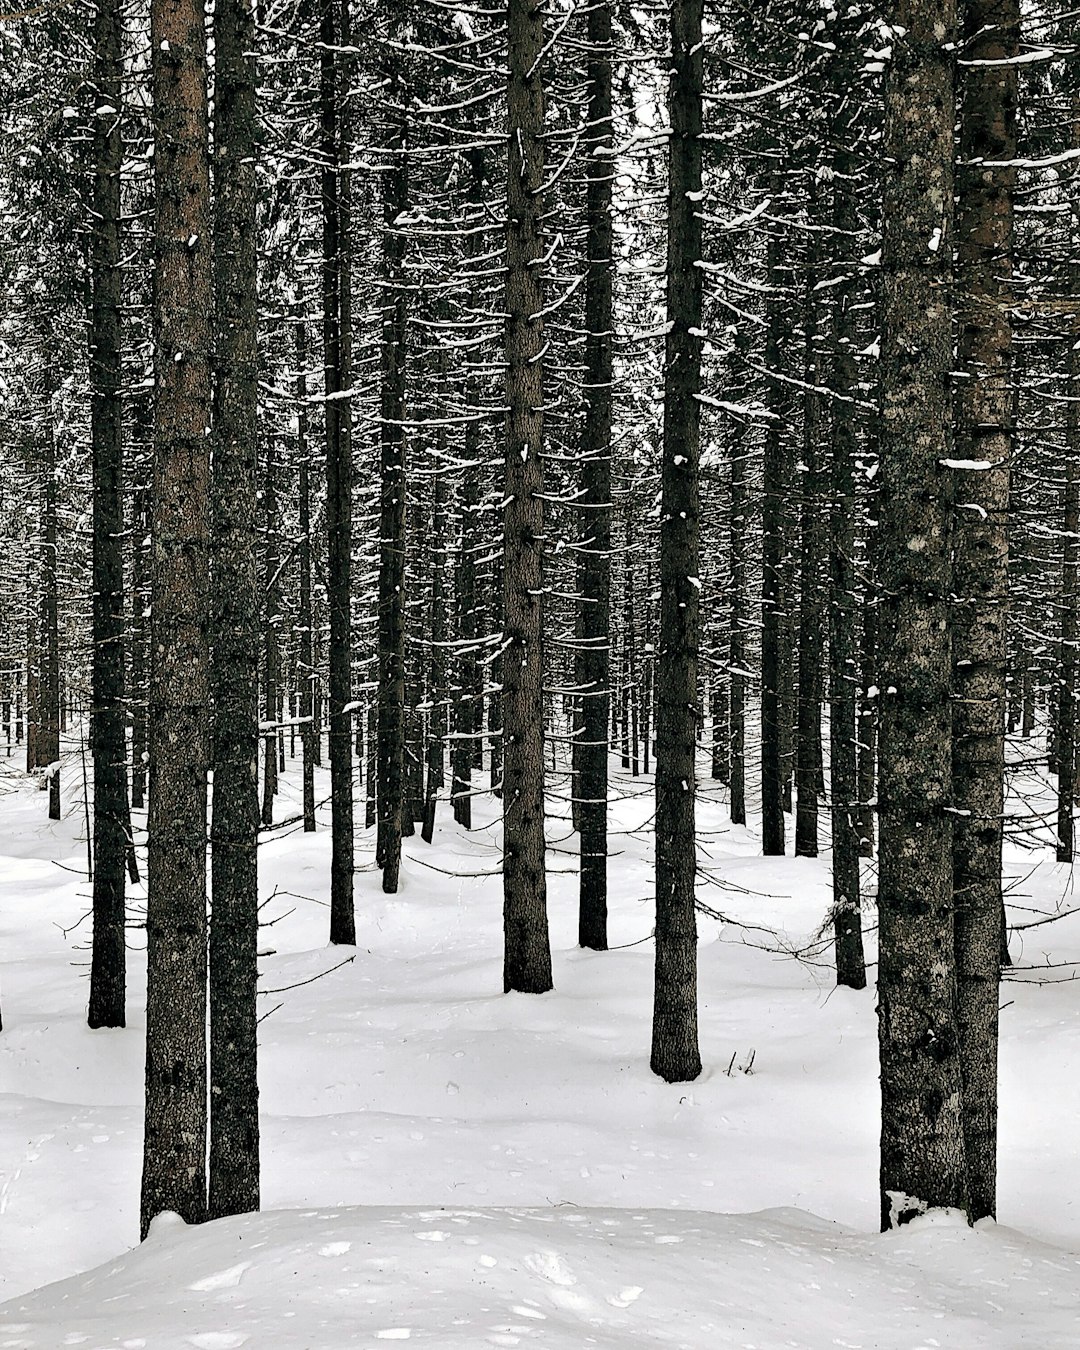 Spruce-fir forest photo spot Paneveggio - Pale di San Martino Prags